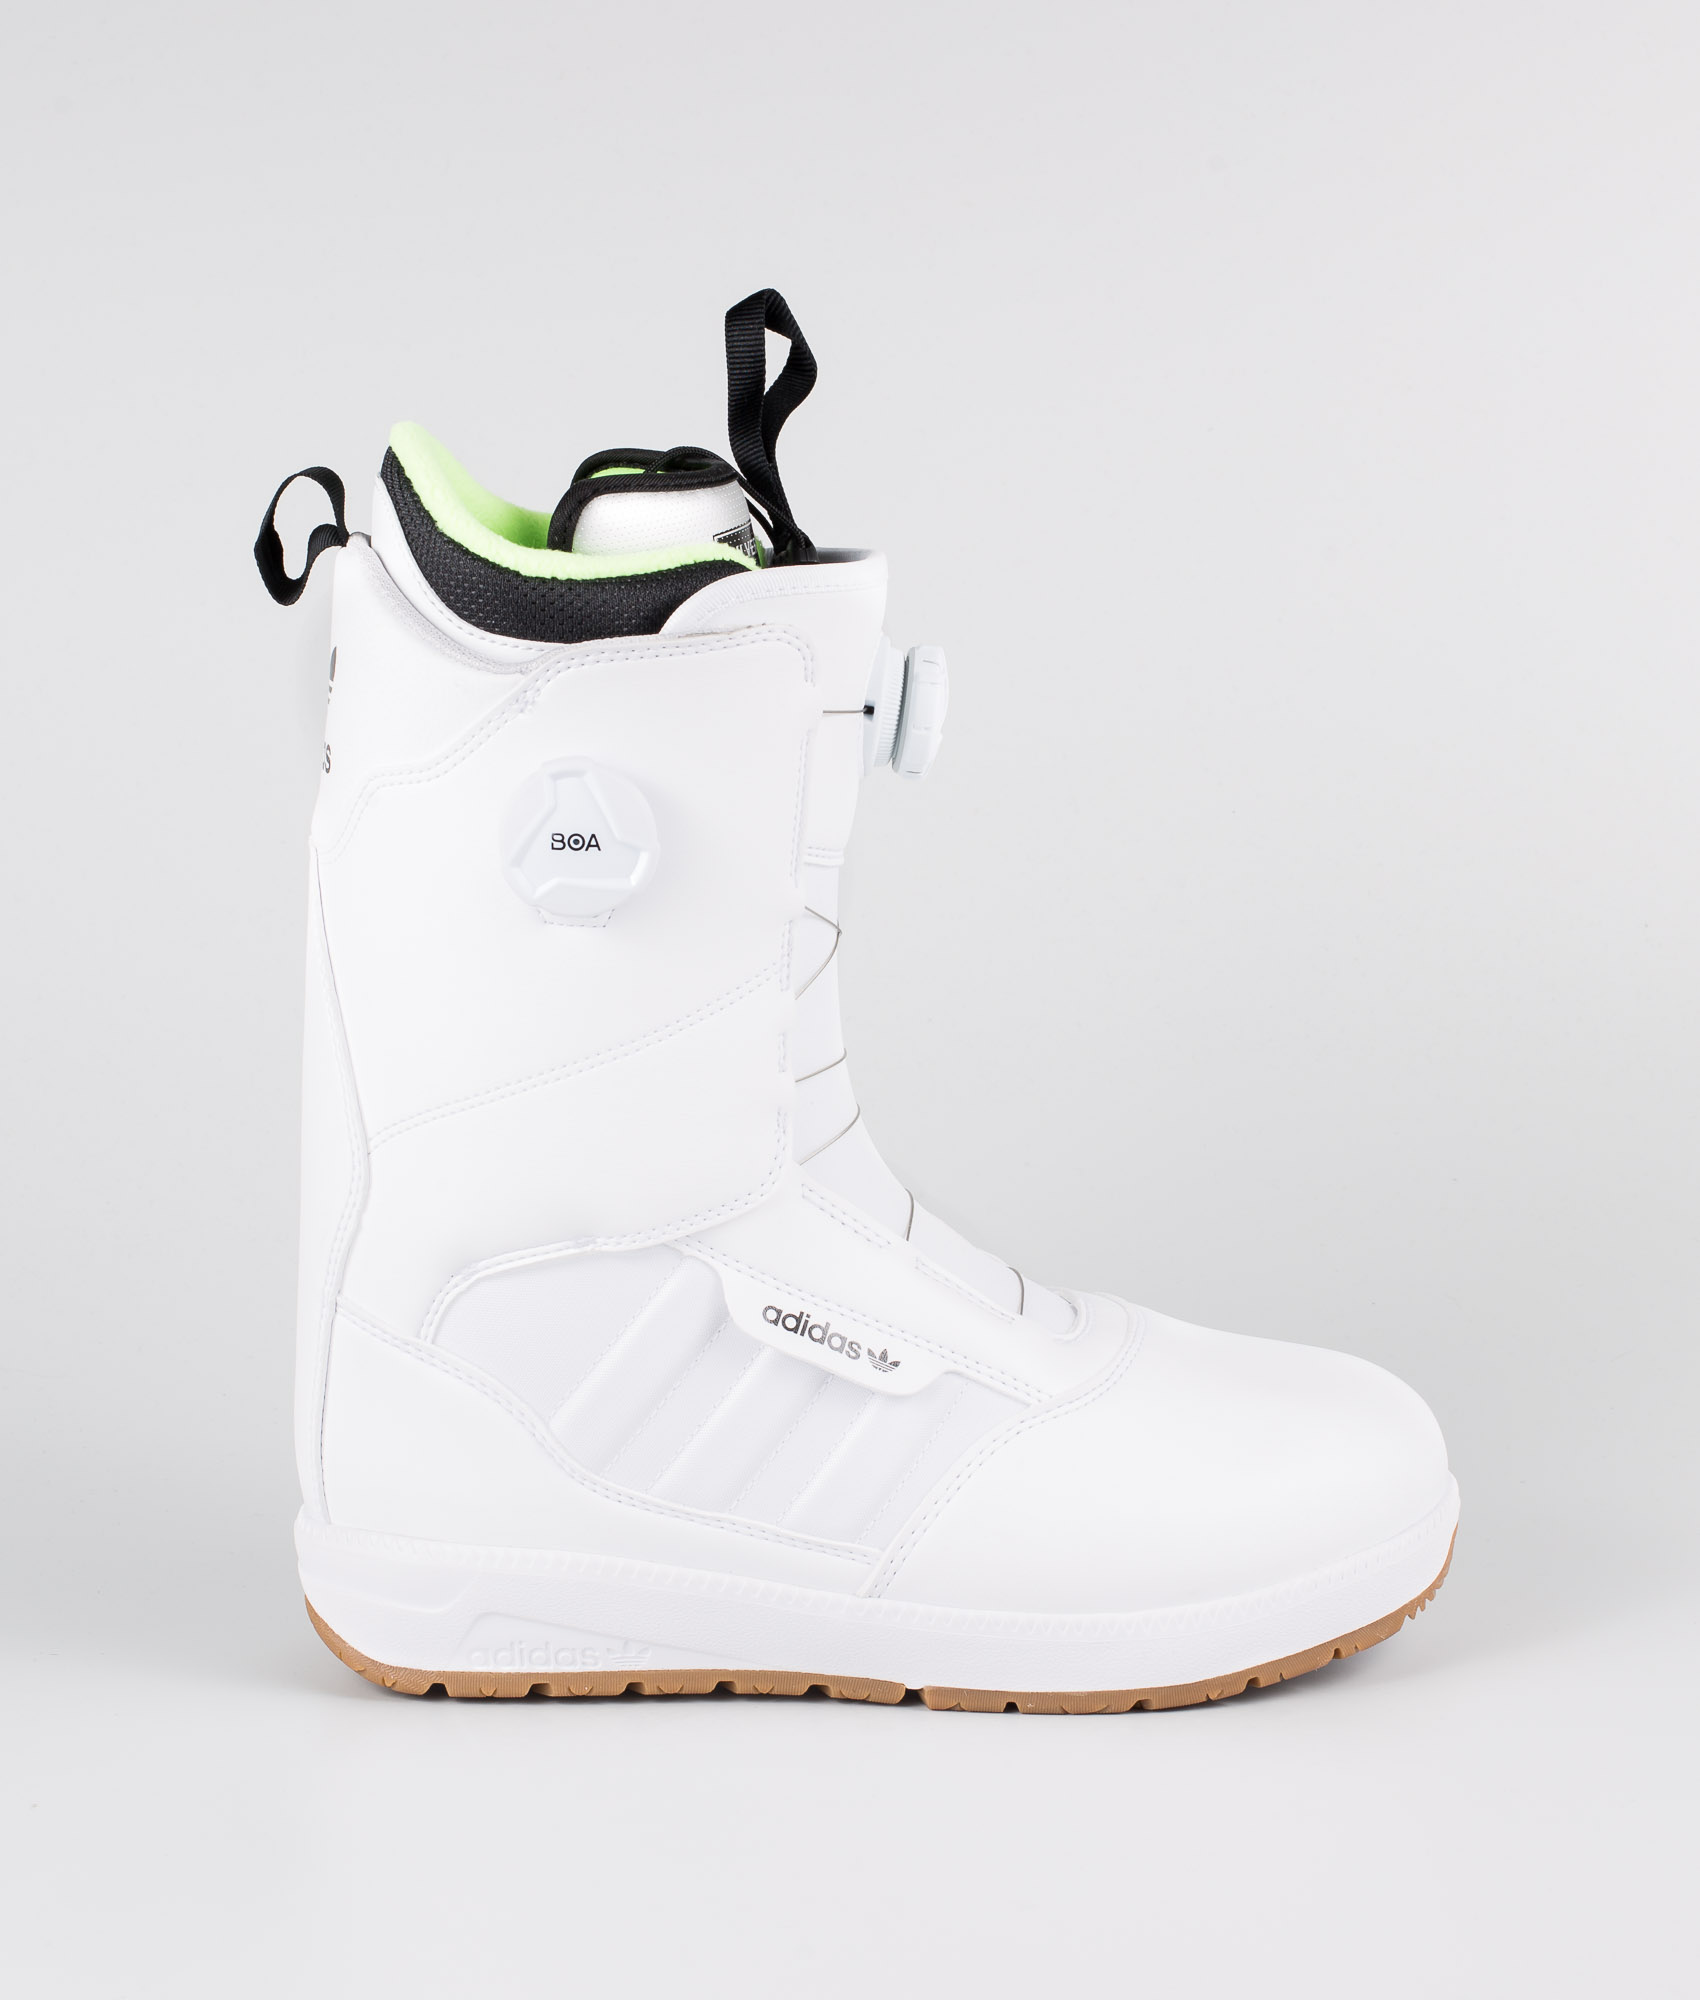 adidas response adv snowboard boots 2019